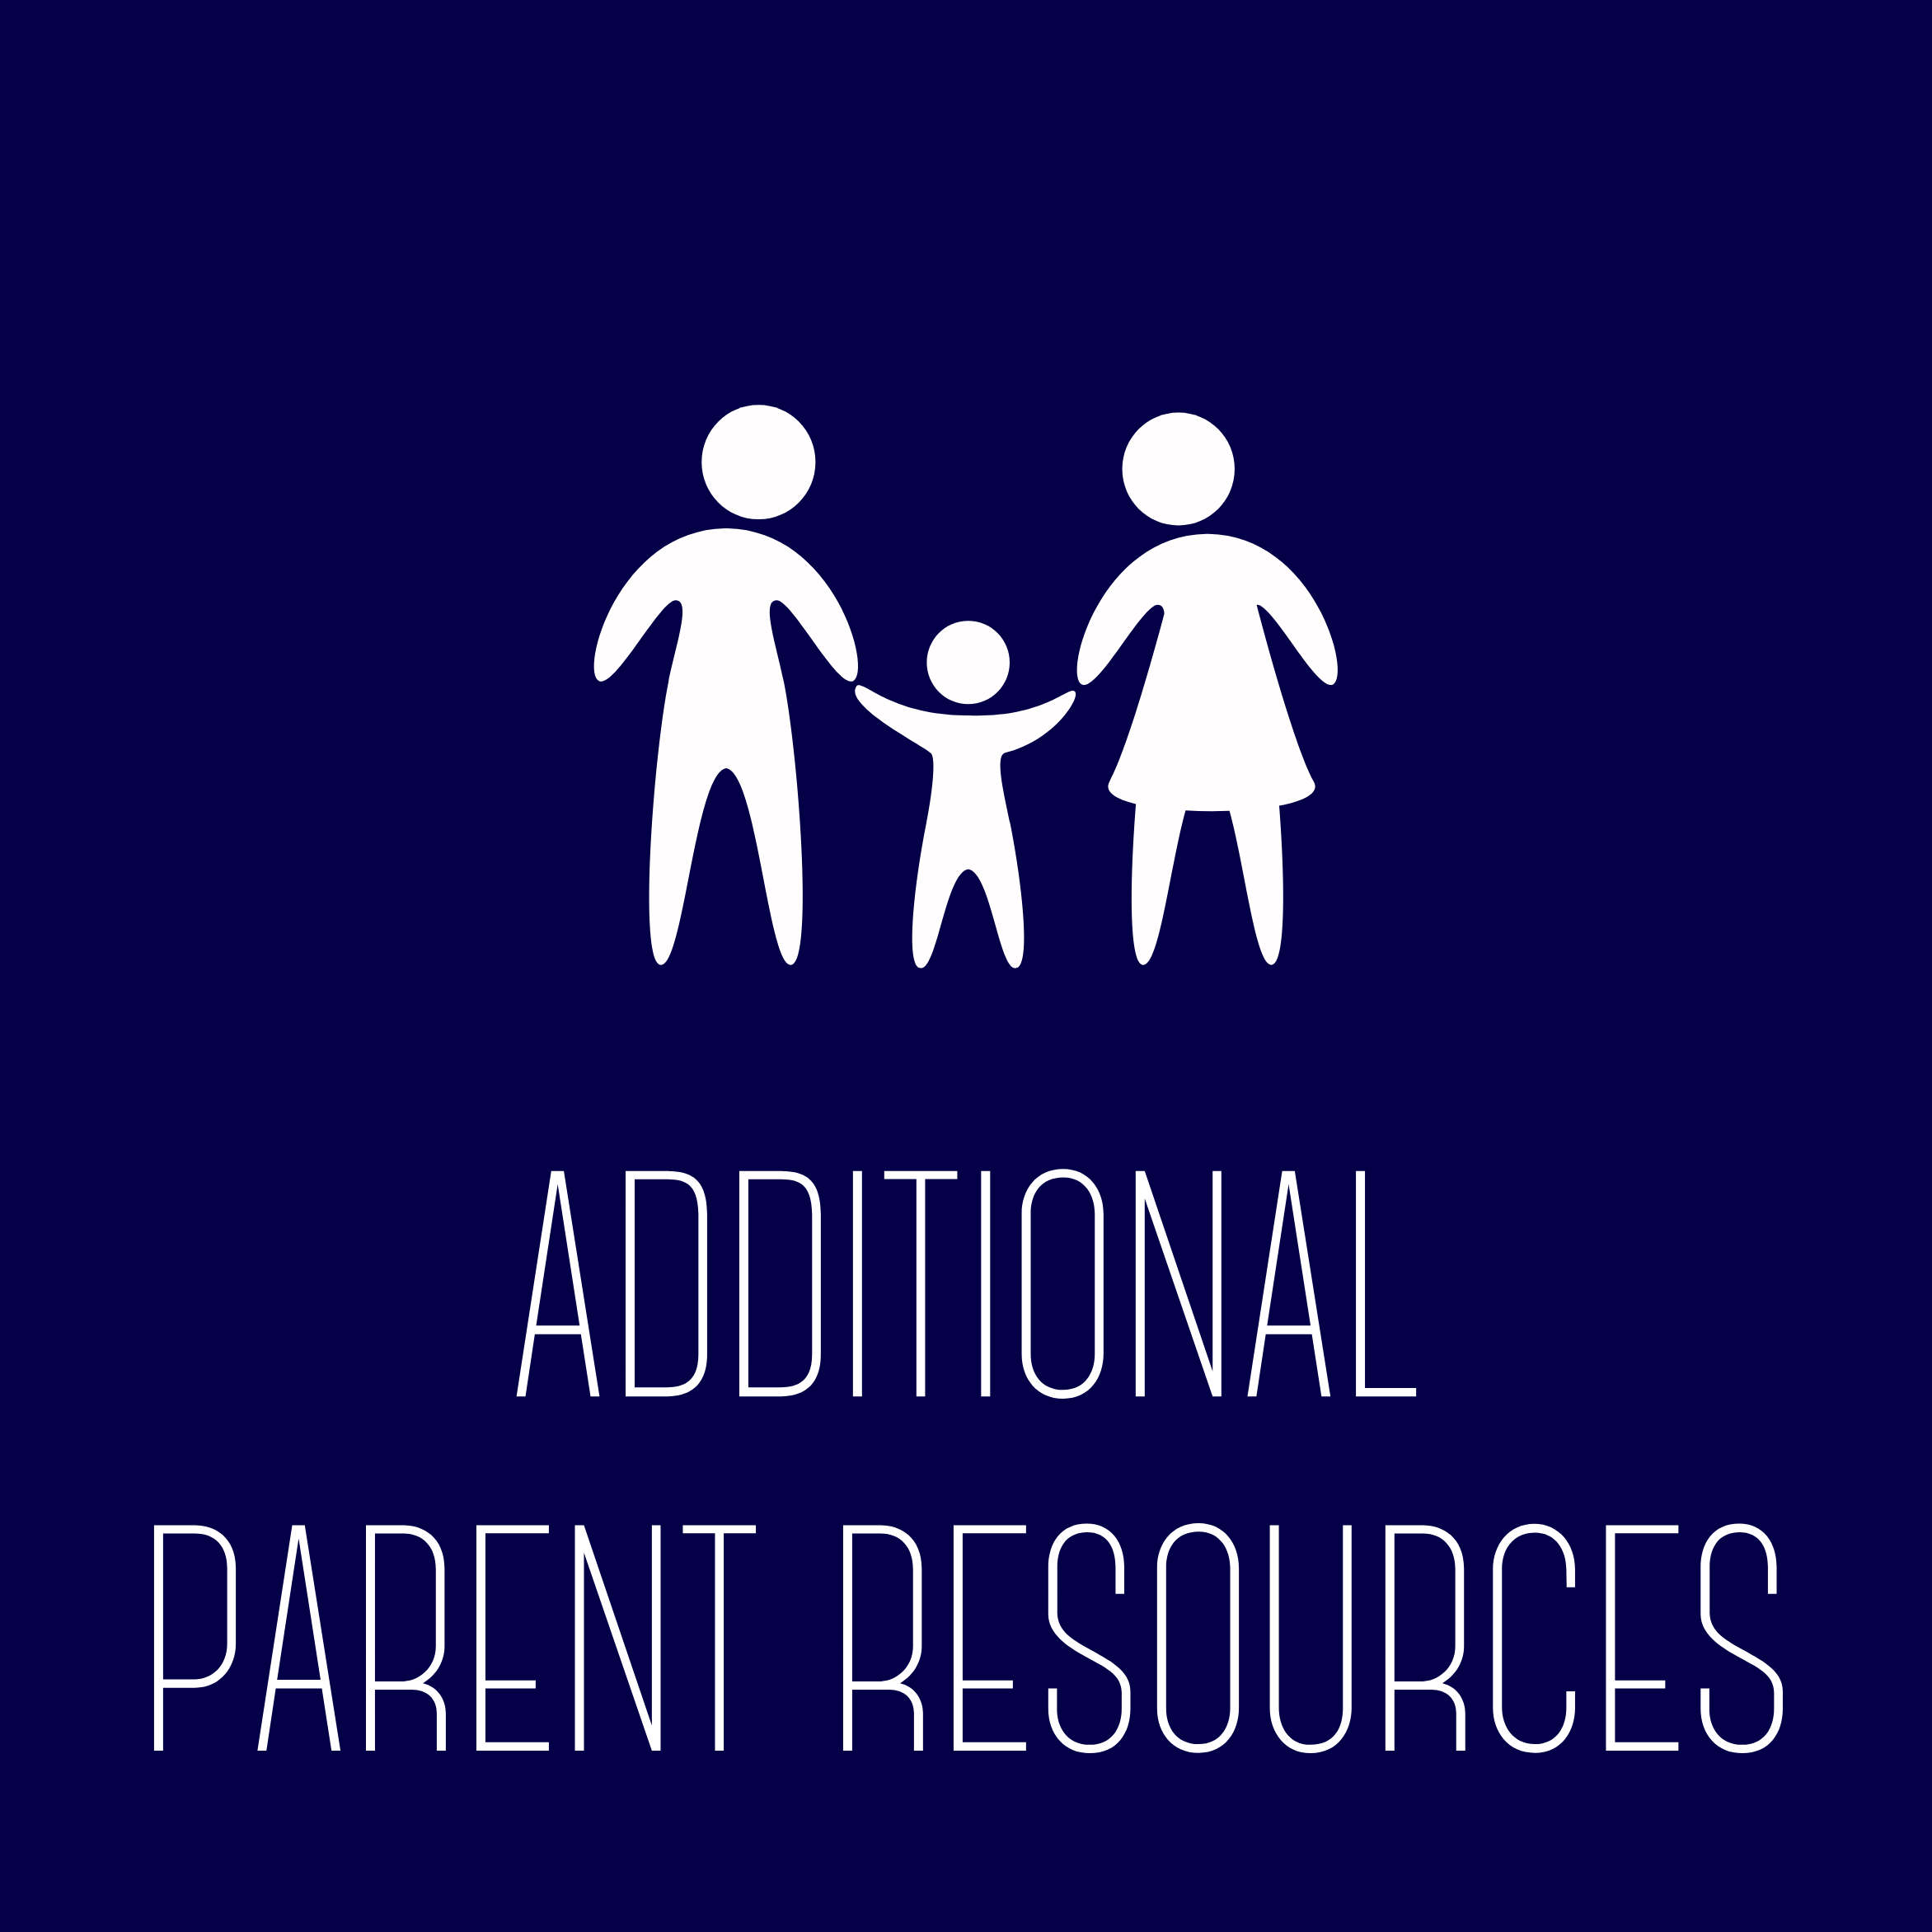 Additional Parent Resources